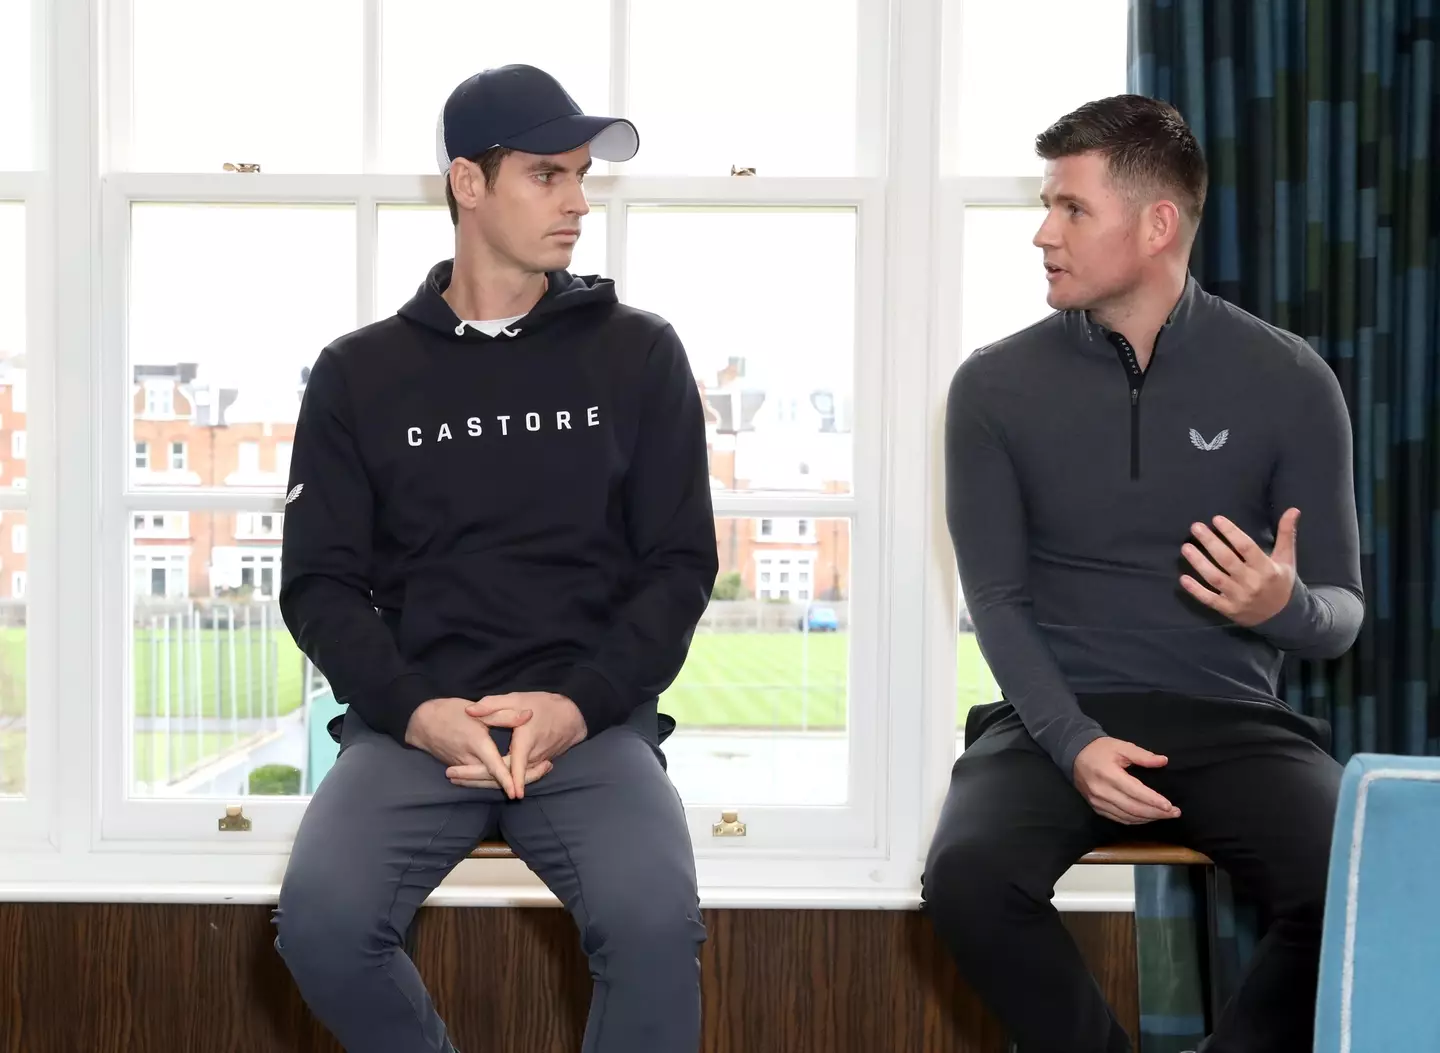 The Liverpool lads' sportswear brand Castore even caught the eye of tennis star Andy Murray (Darren Gerrish/WireImage)